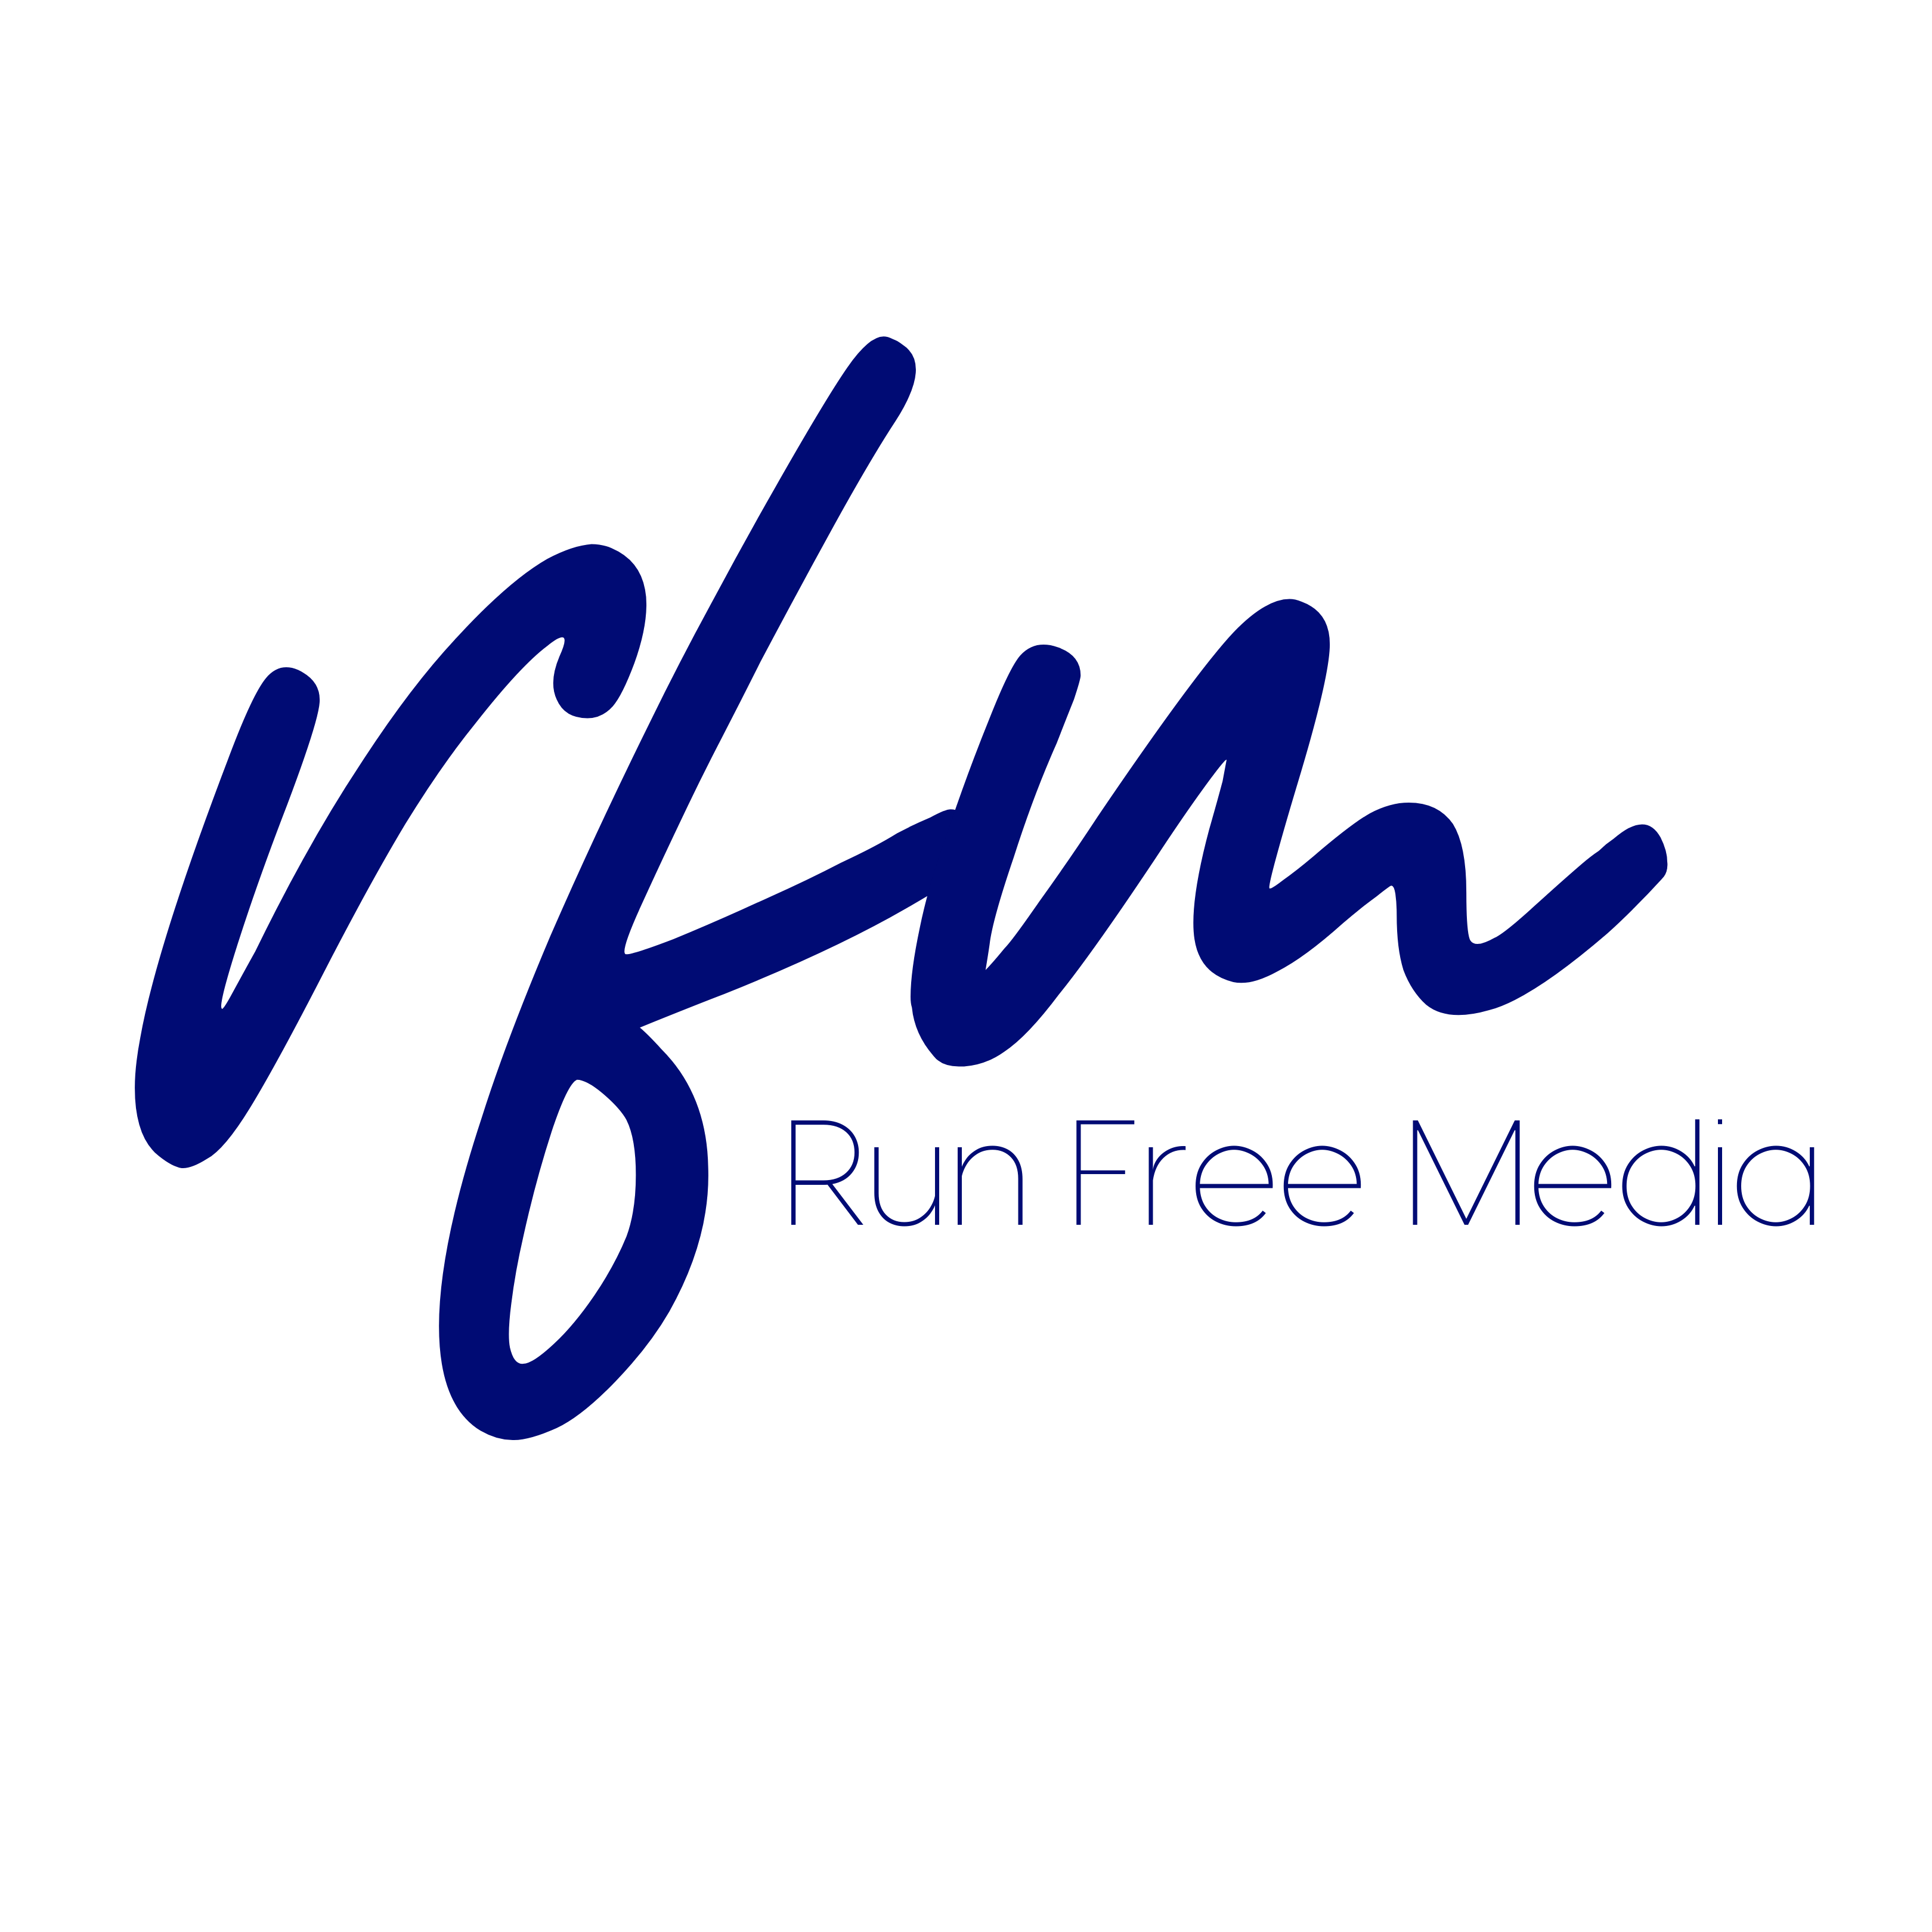 Run Free Media